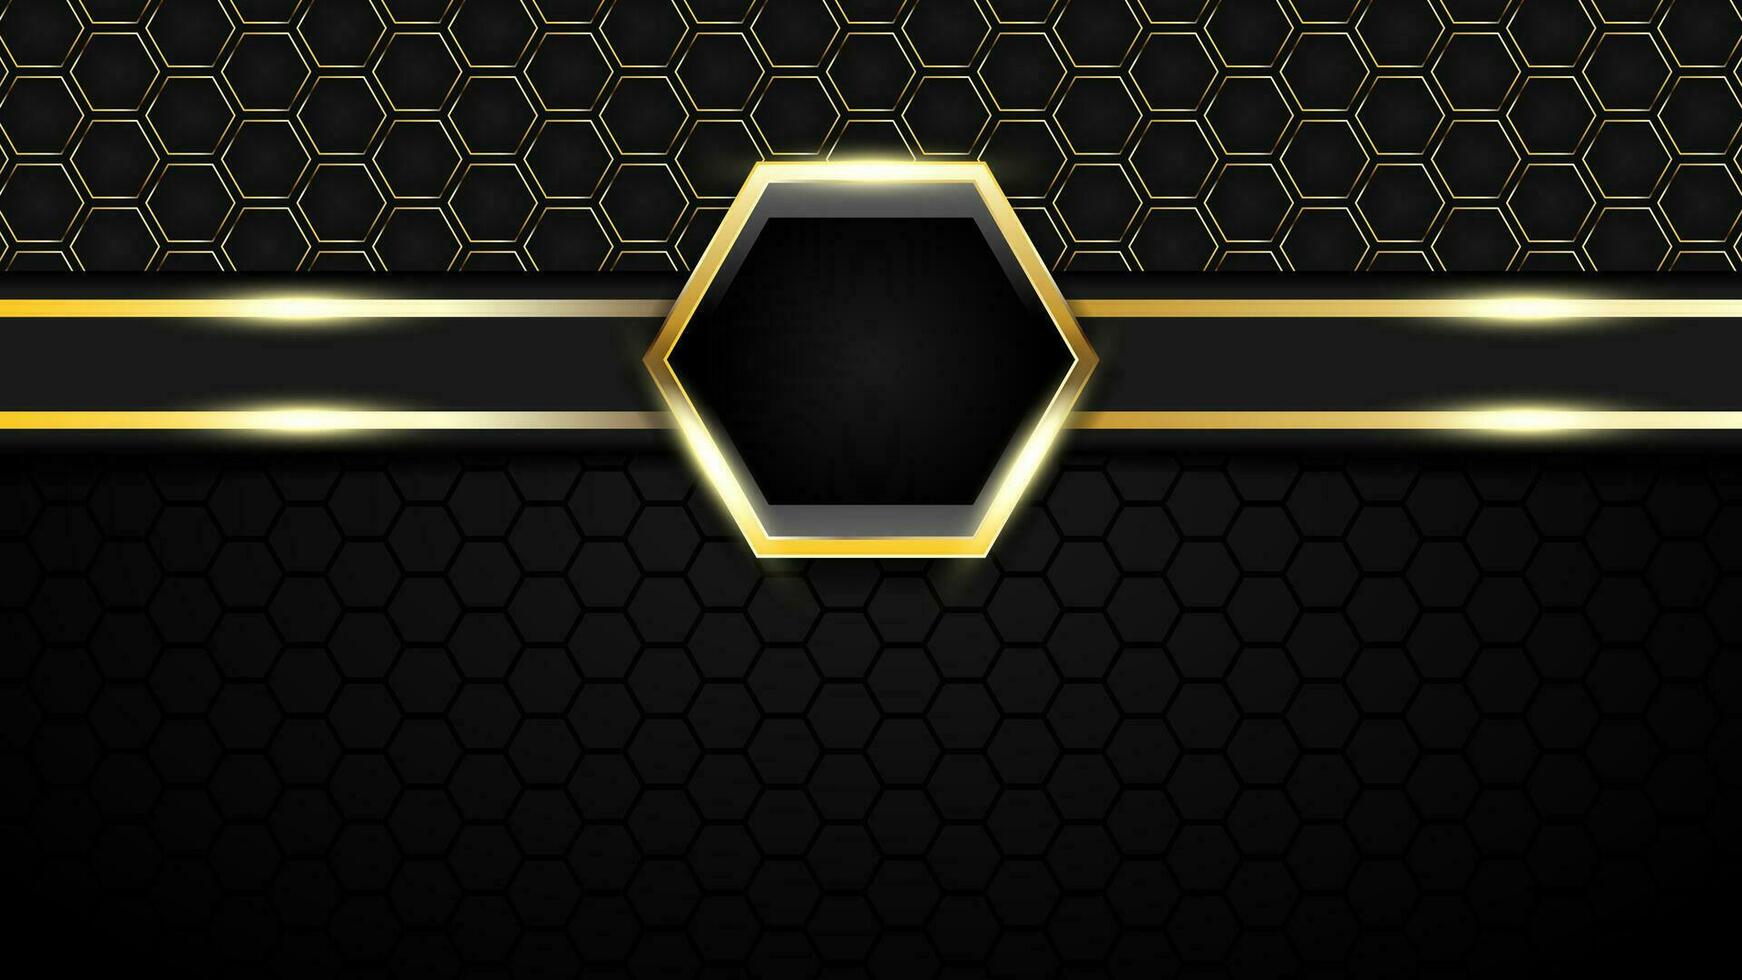 Golden Hexagonal VIP Card with Black Background vector